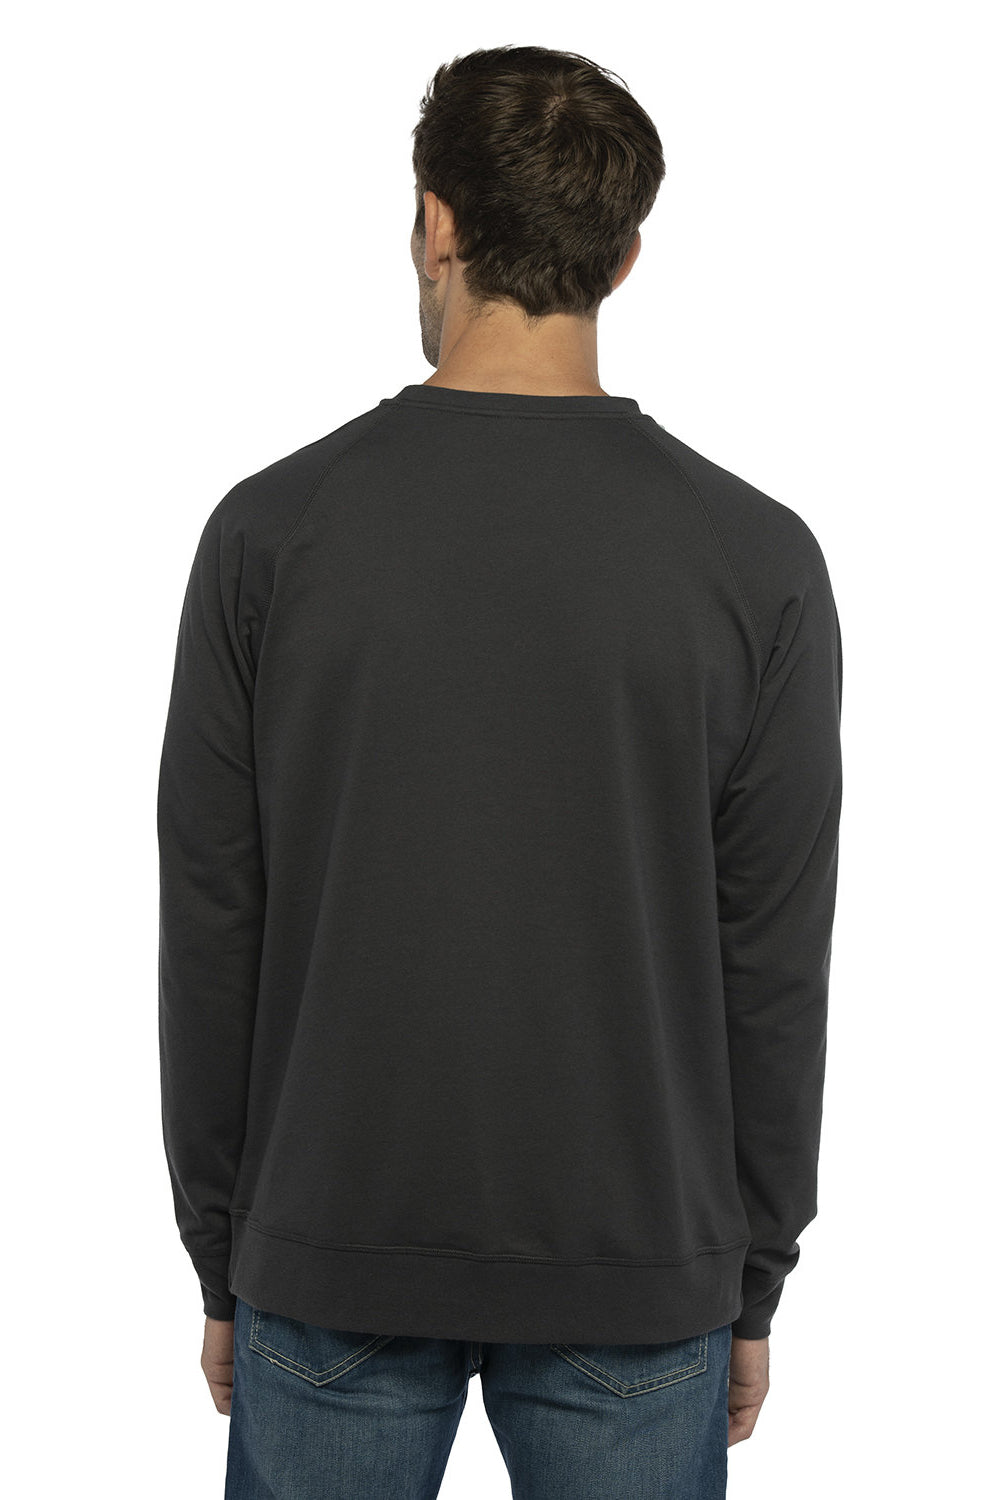 Next Level N9000/9000 Mens French Terry Long Sleeve Crewneck T-Shirt Graphite Black Back